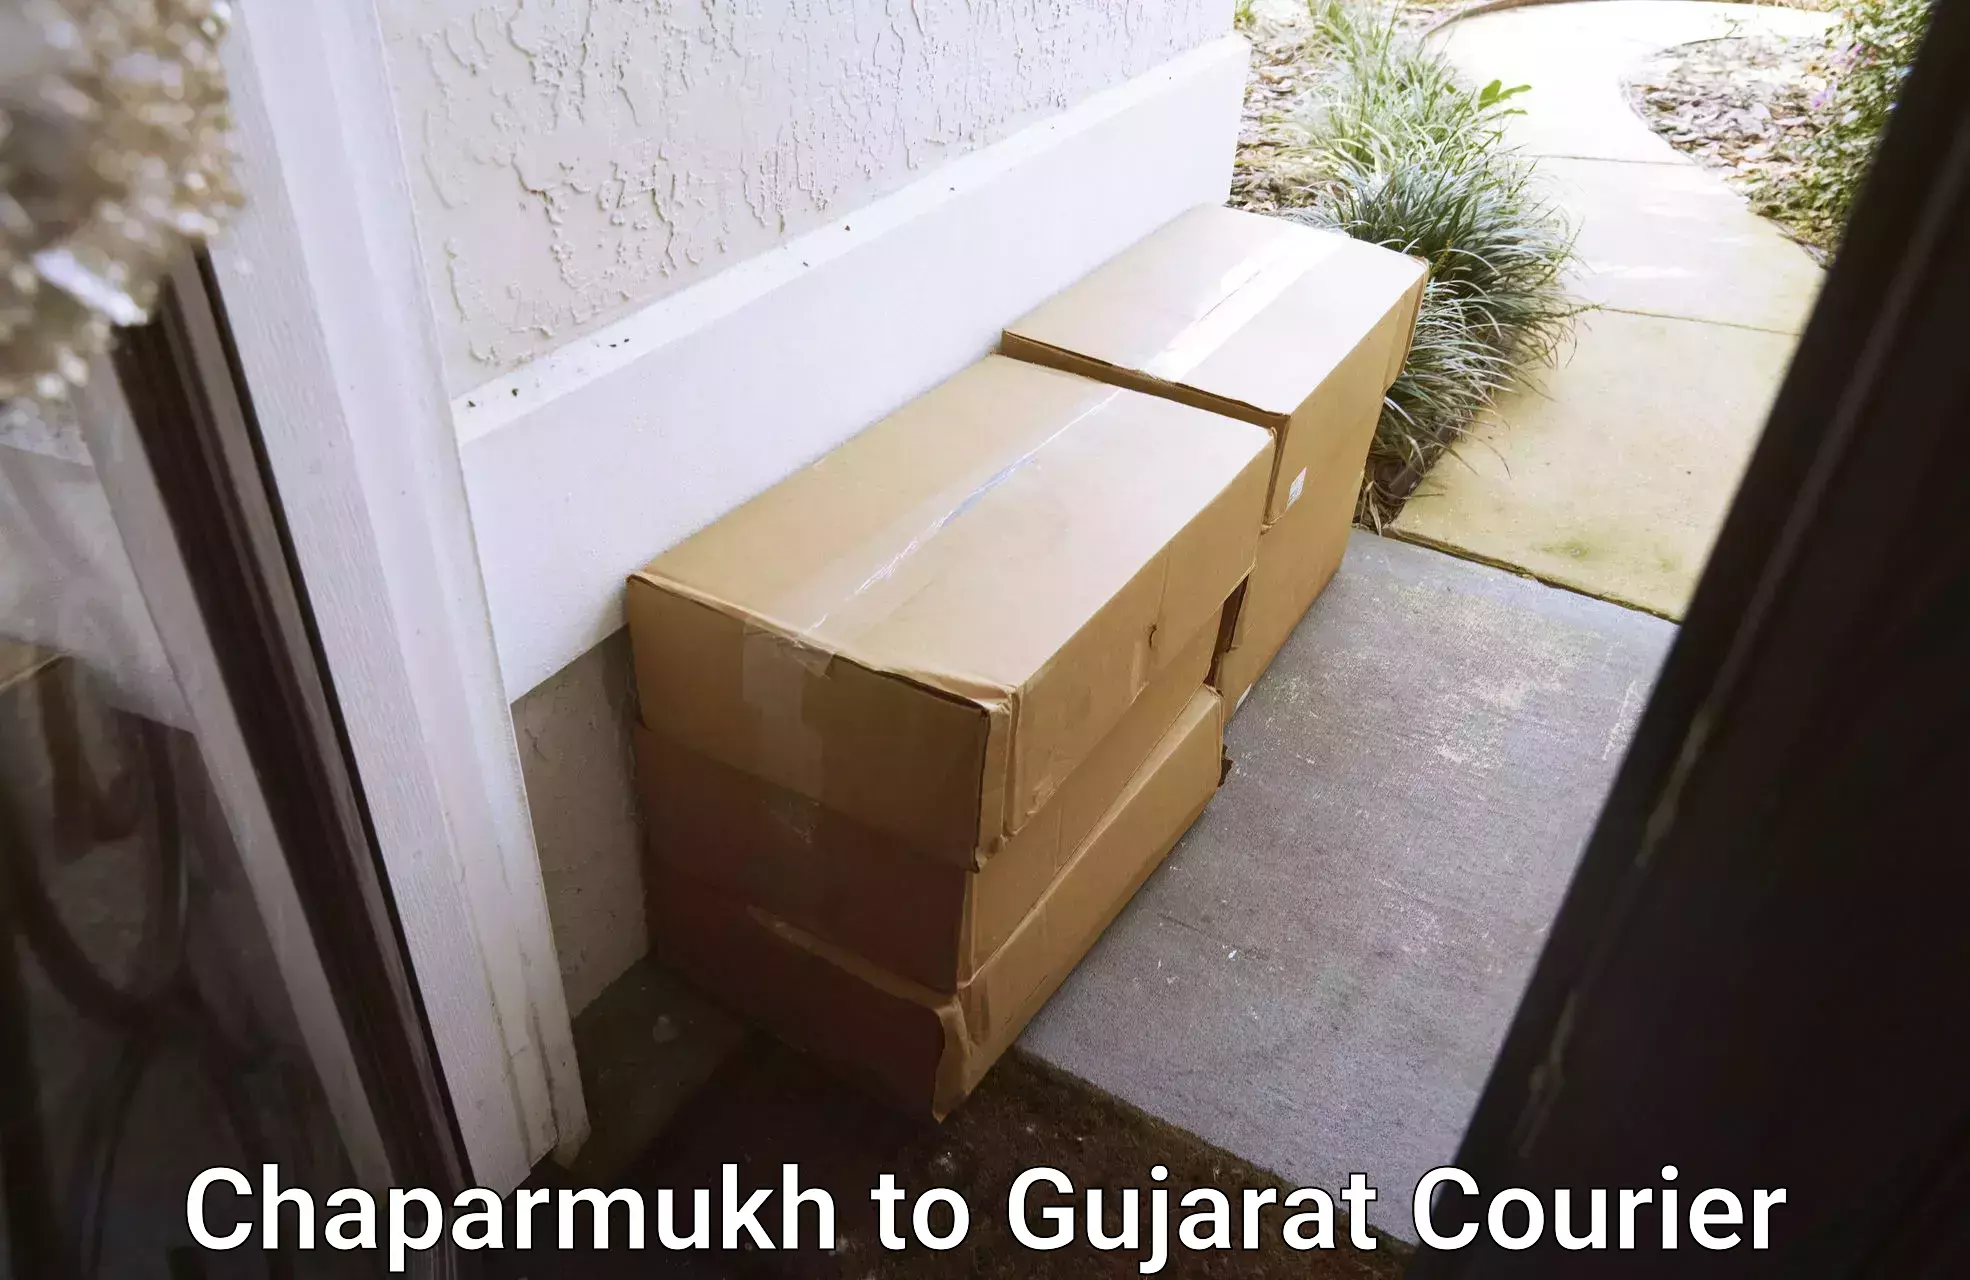 Professional courier handling Chaparmukh to Dediapada